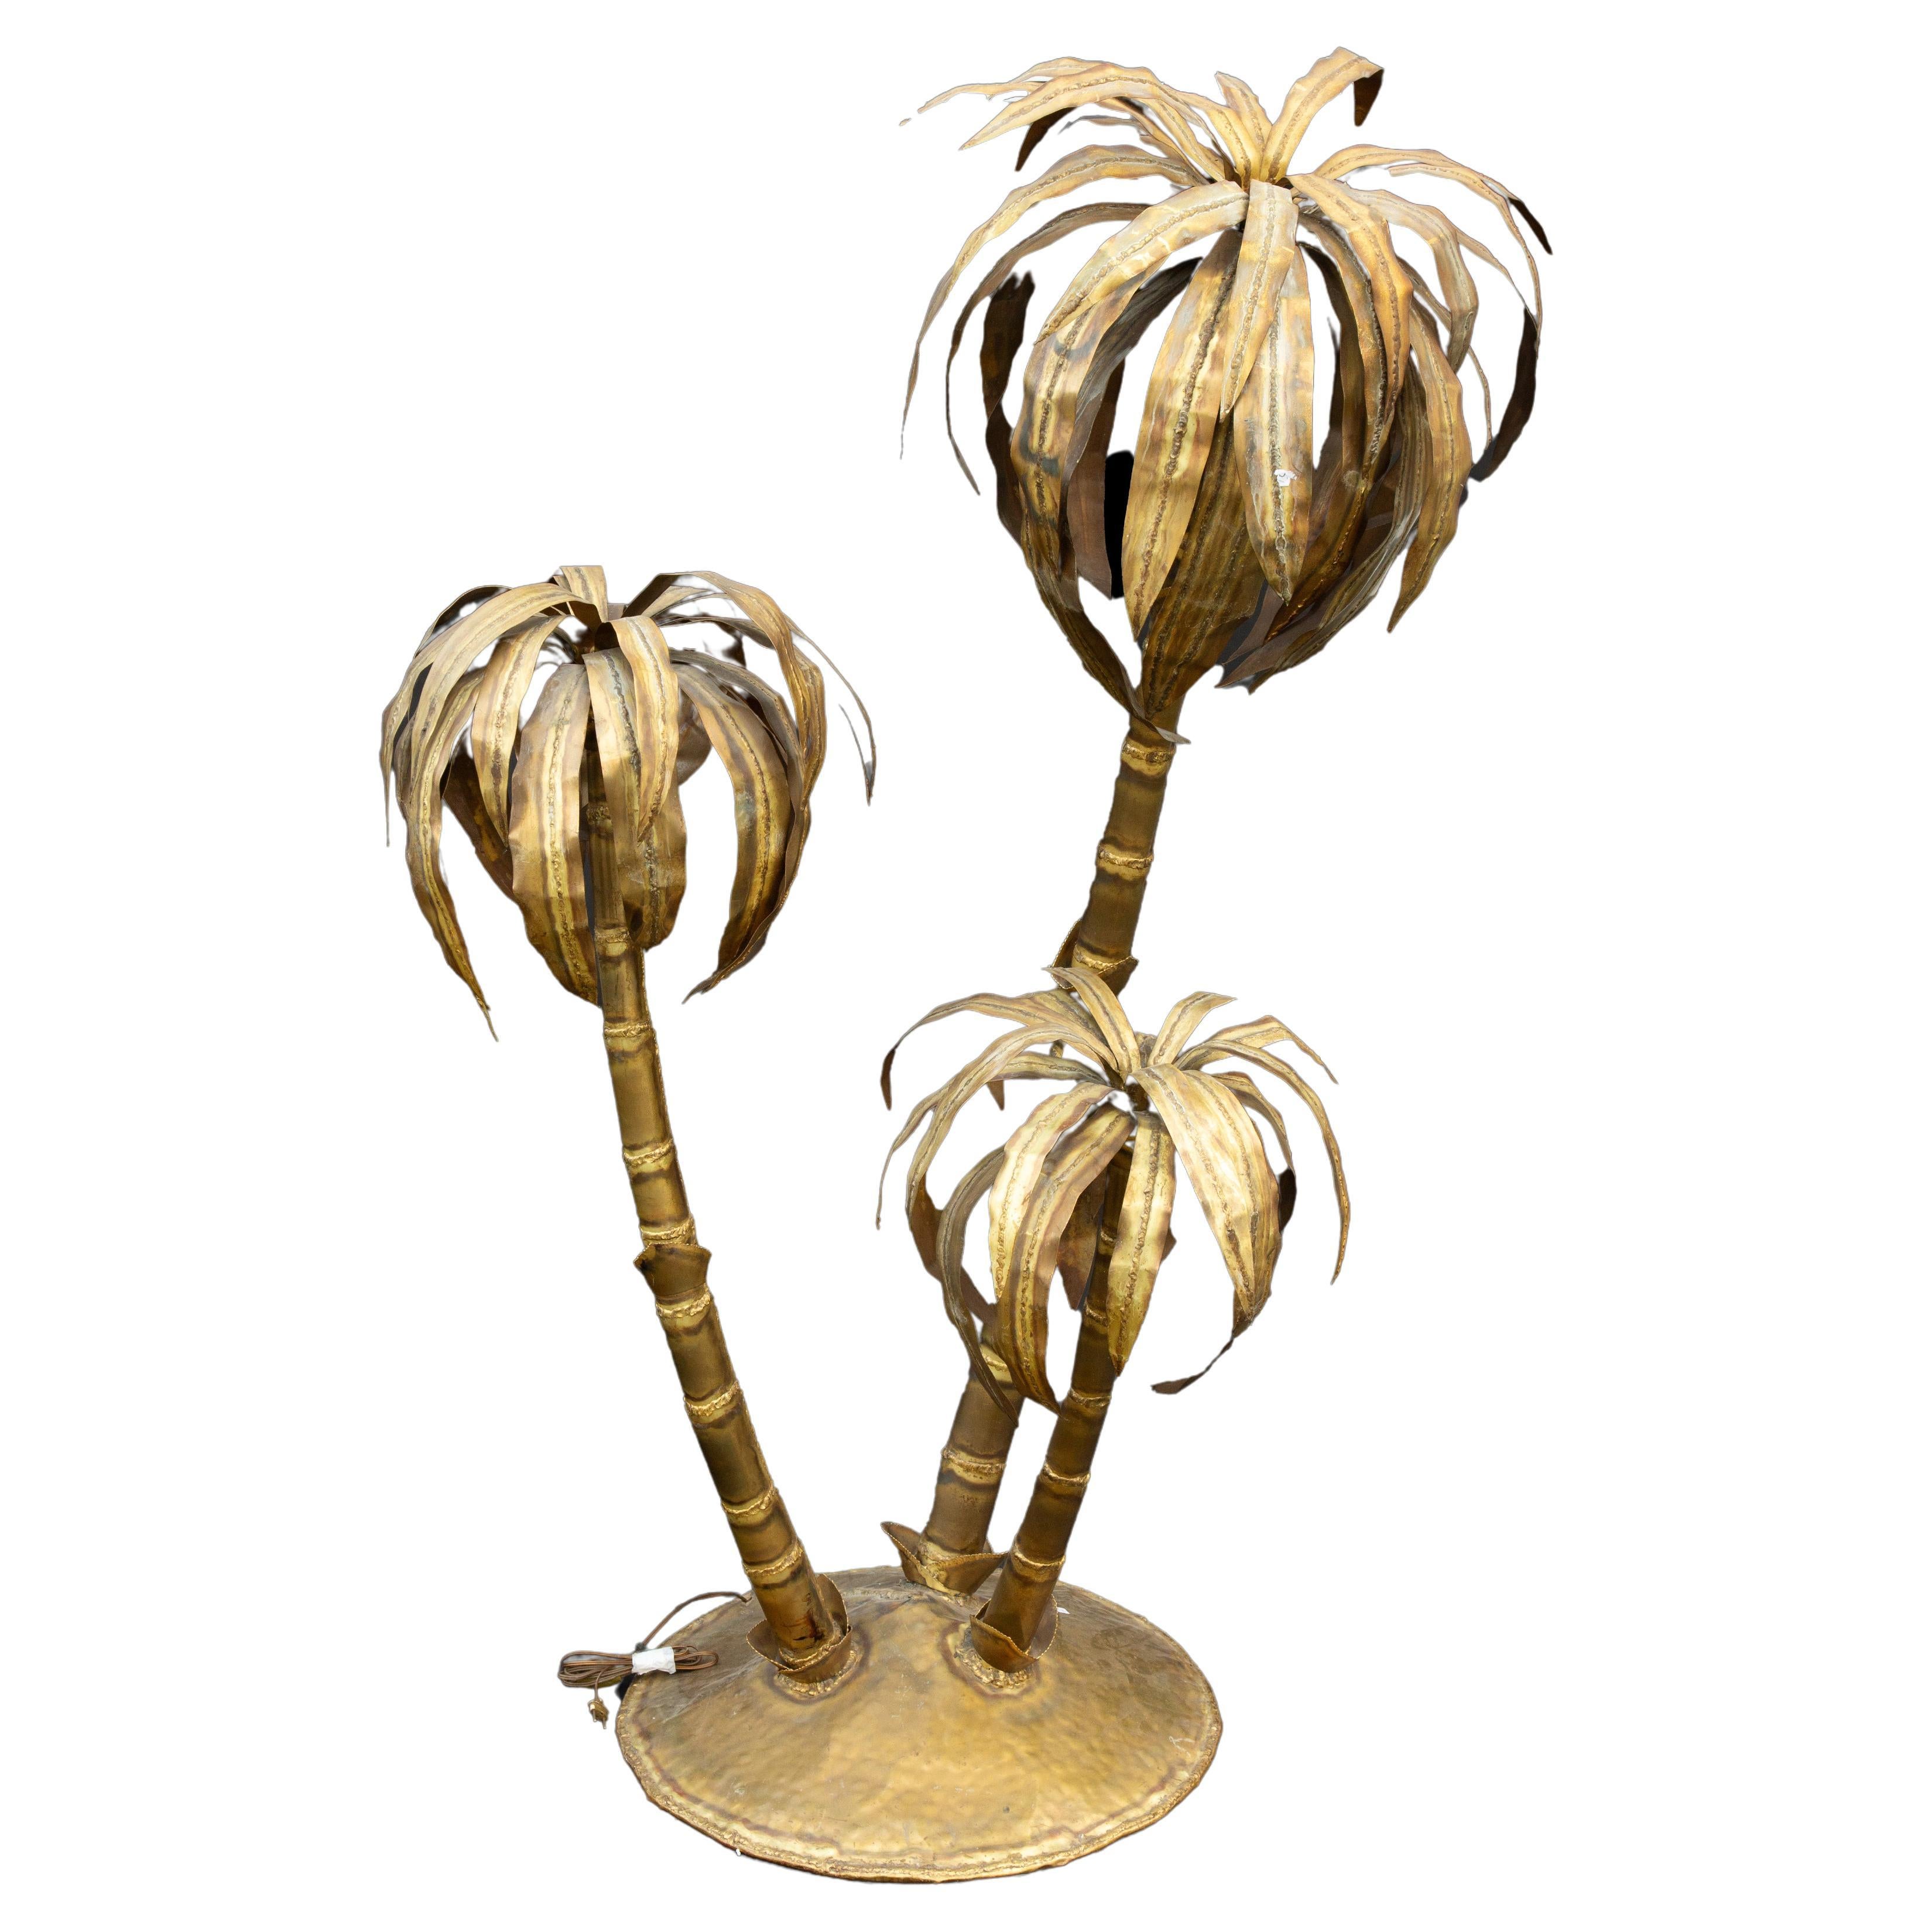 Very large Mid-Century Brass Palm Tree Floor Lamp Attrib. to Maison Jensen- 77"H For Sale